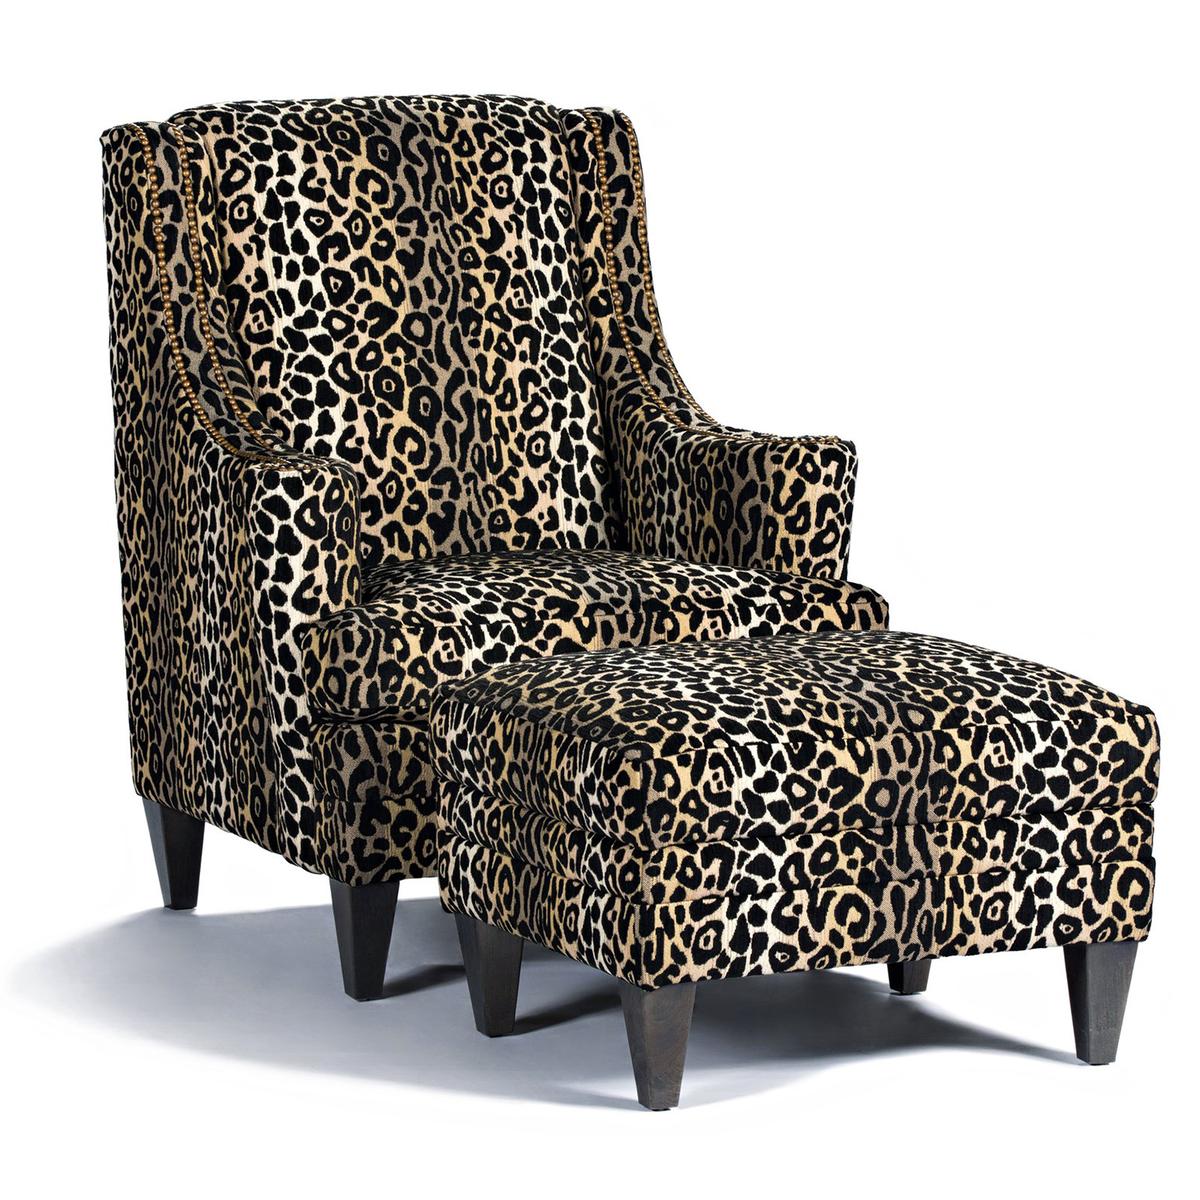 *Marshfield Emily Chair & Non Storage Ottoman (2 Piece Set) Was $2094.99 NOW: $699.99